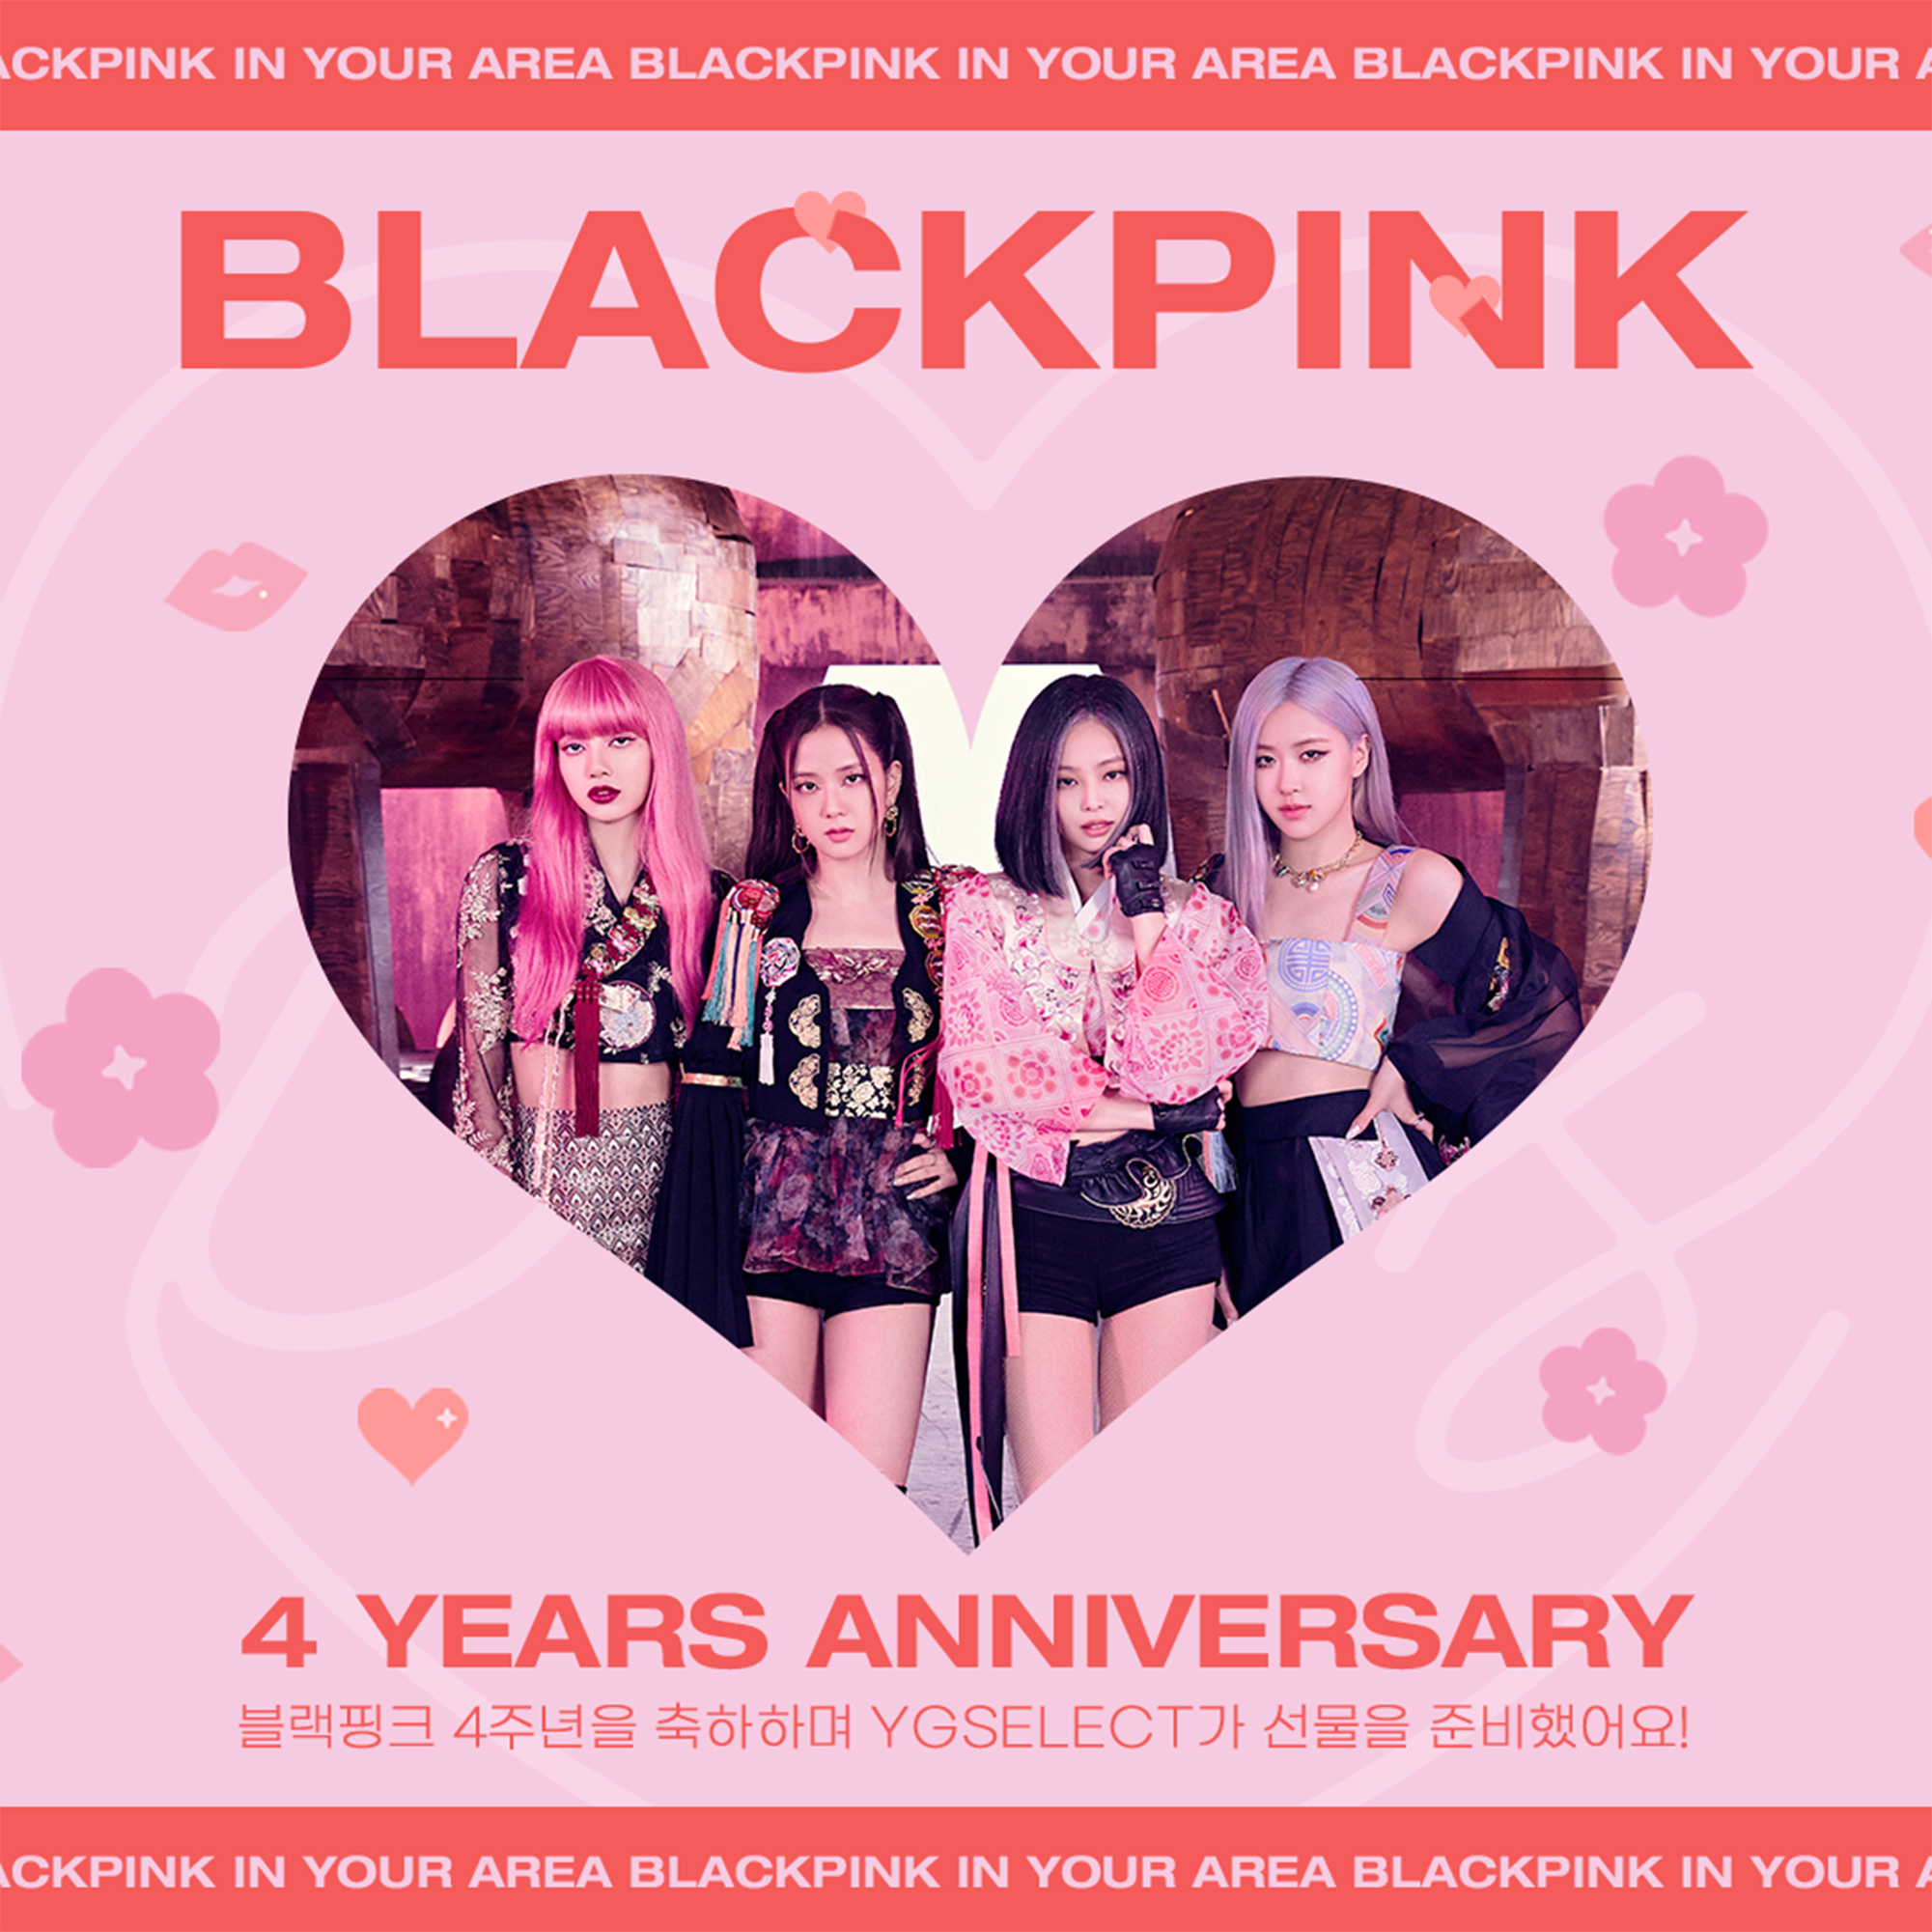 Anniversary blackpink BLACKPINK announce